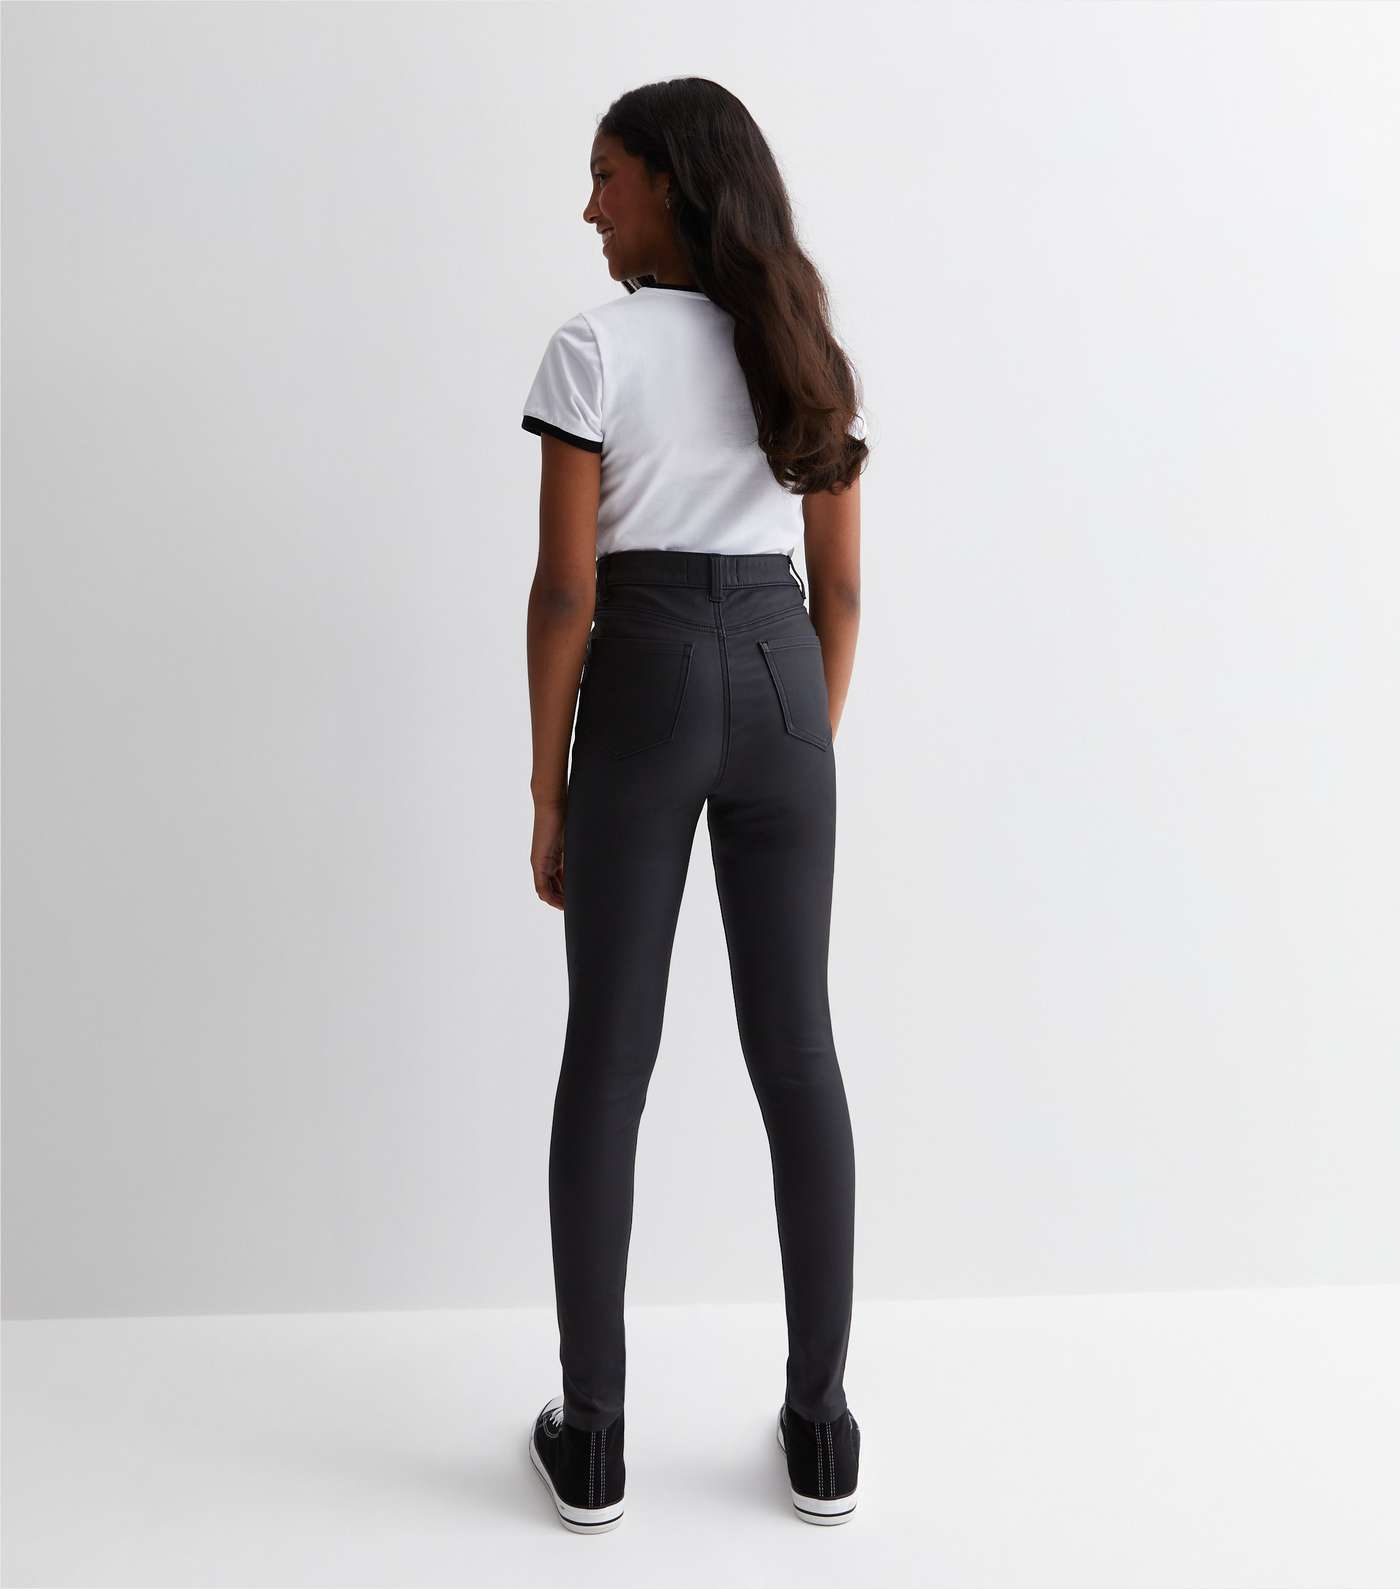 Girls Black Leather-Look Skinny Jeans Image 4